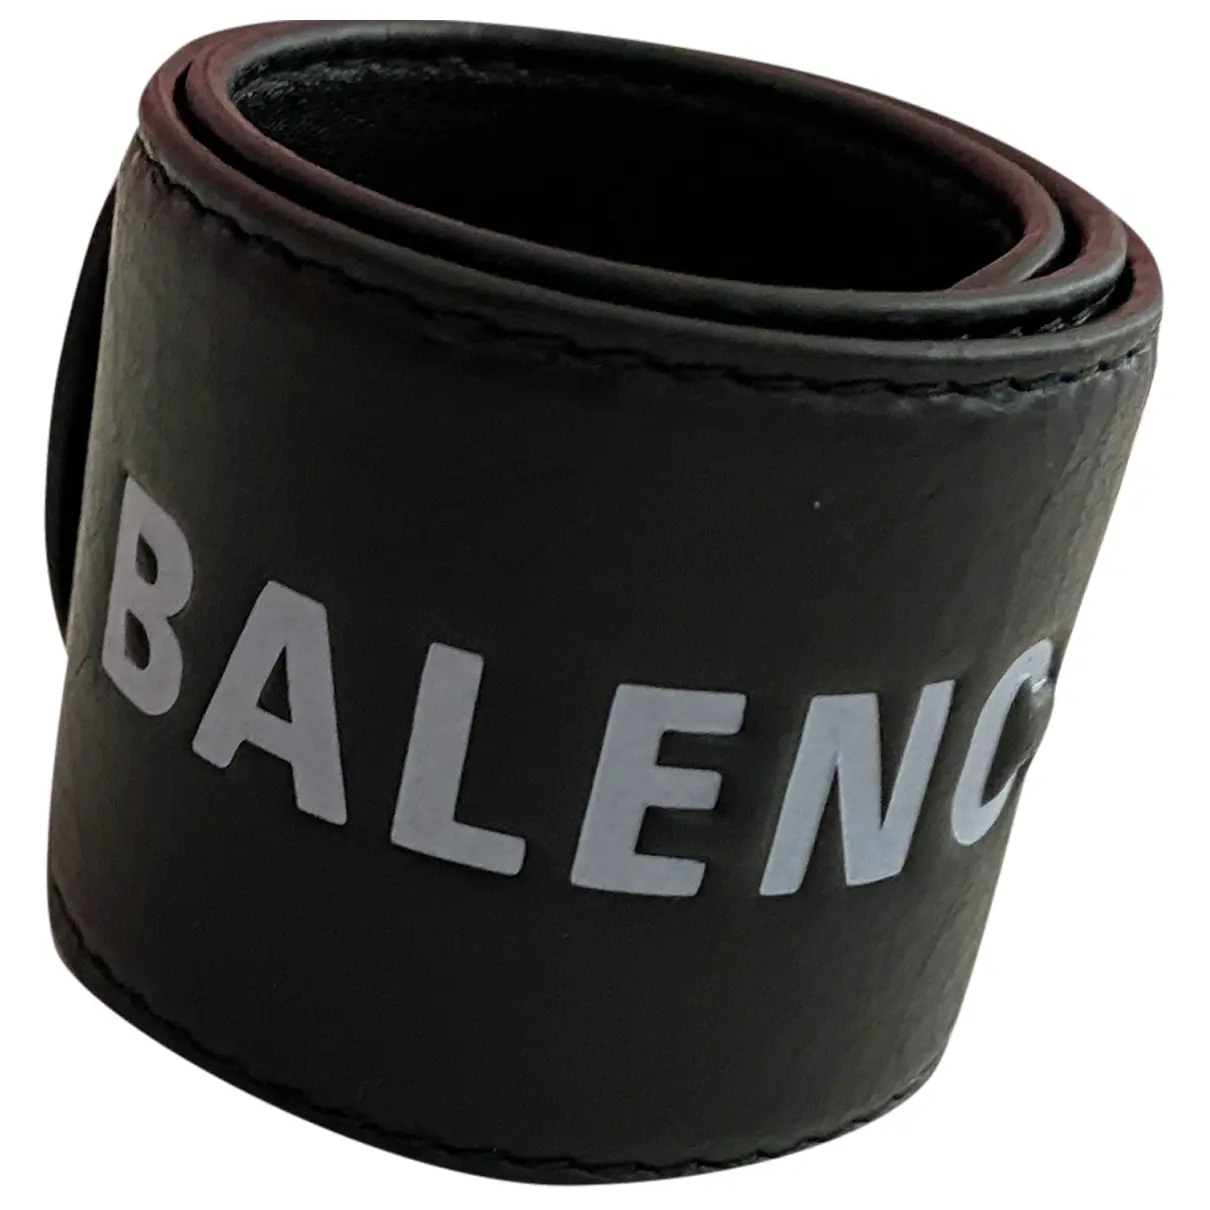 Leather bracelet Balenciaga